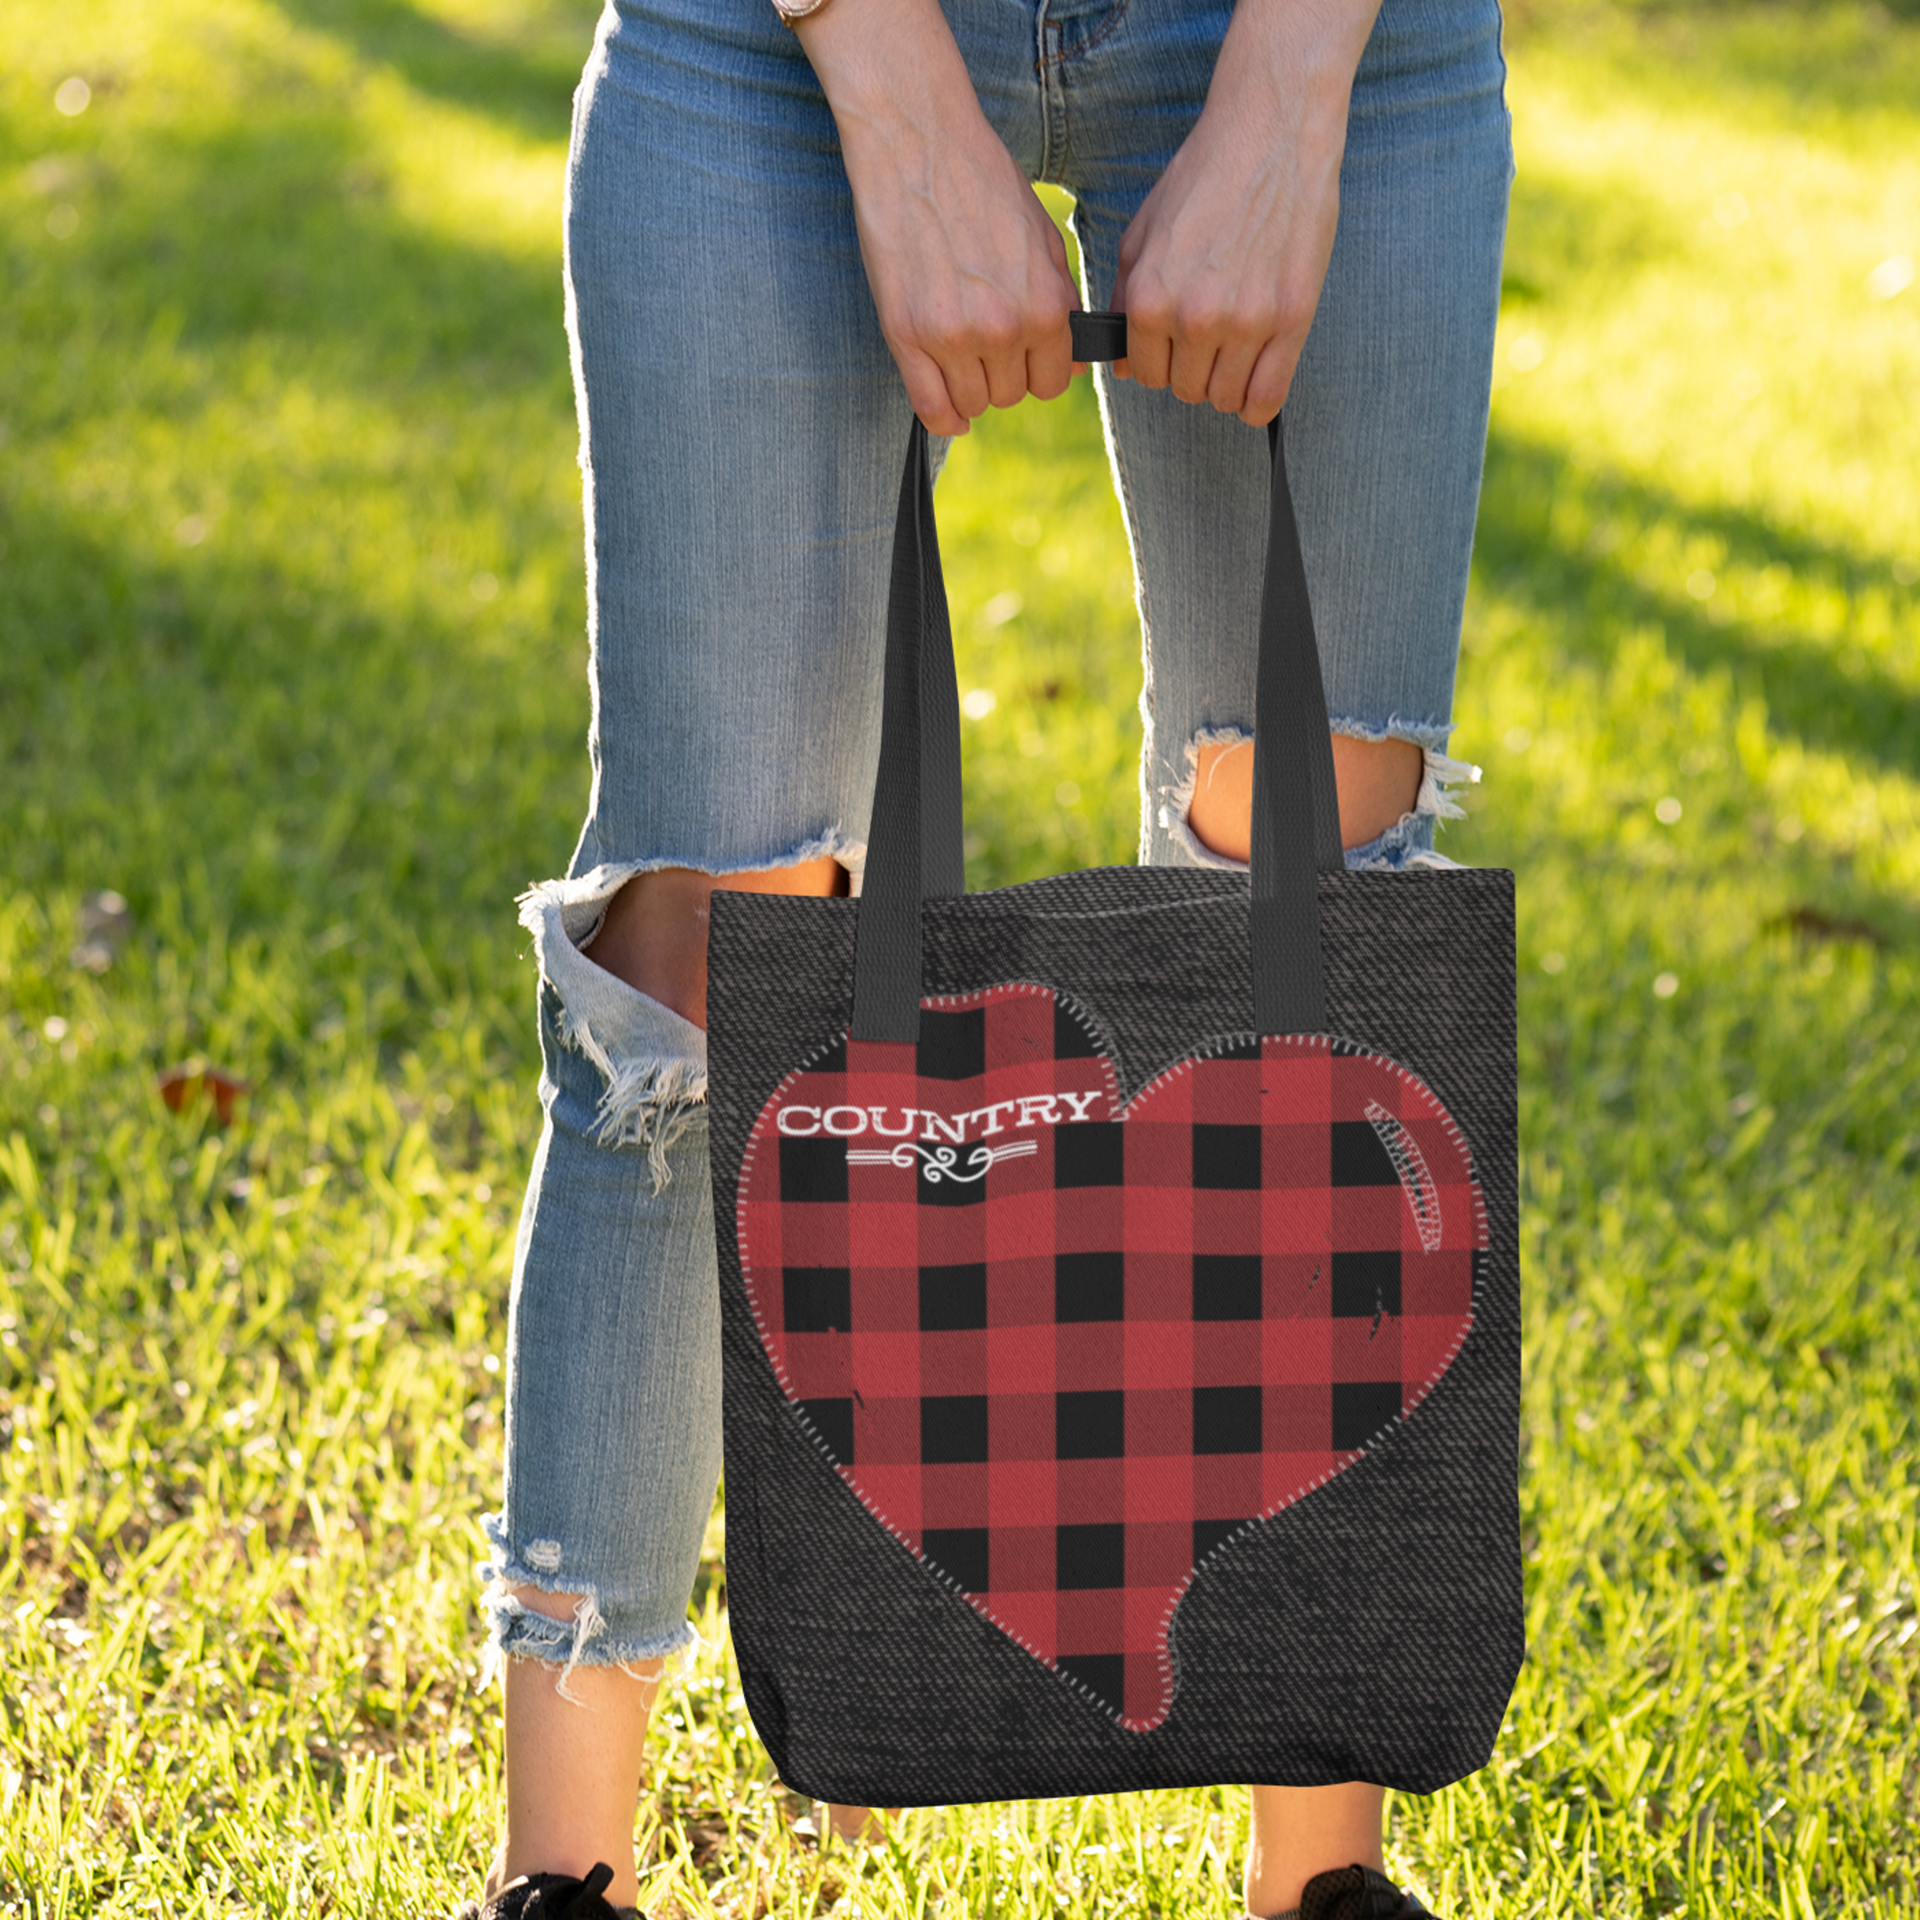 country girl at heart tote bag